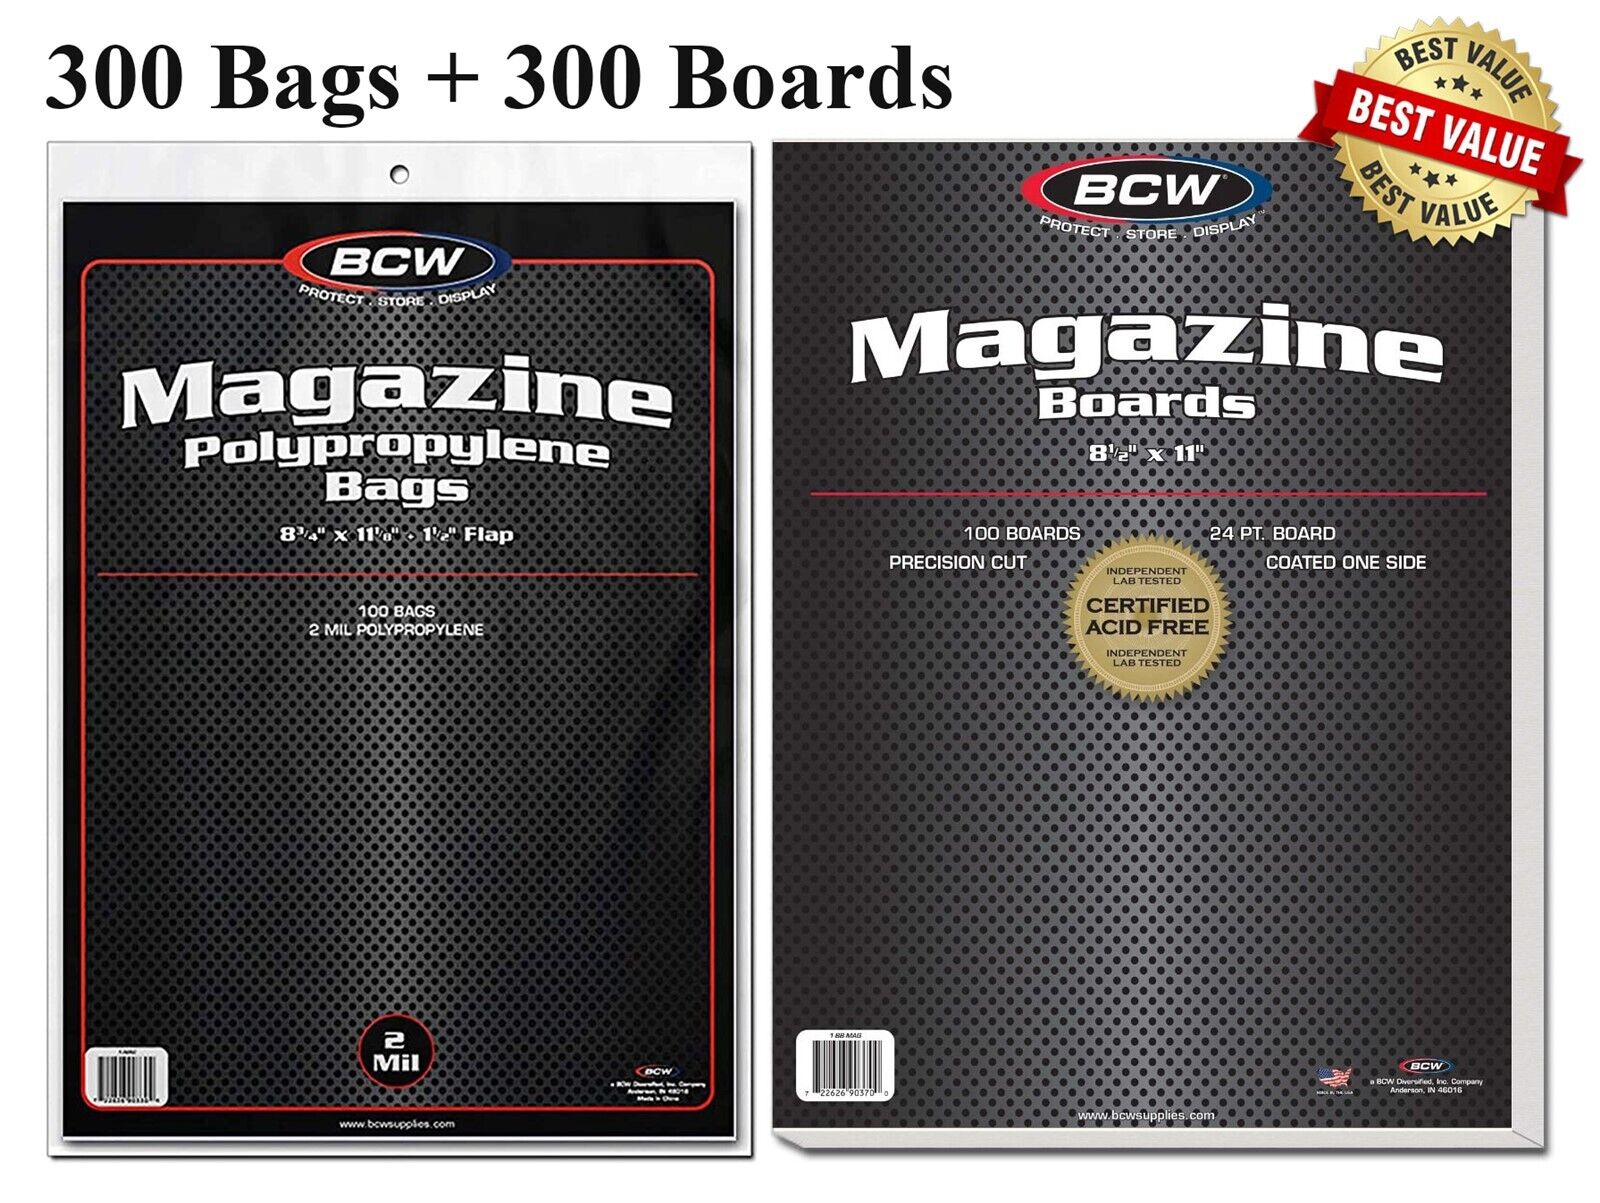 300 BCW Magazine Bags & Boards Archival Best Comic Storage Acid Free Long Term